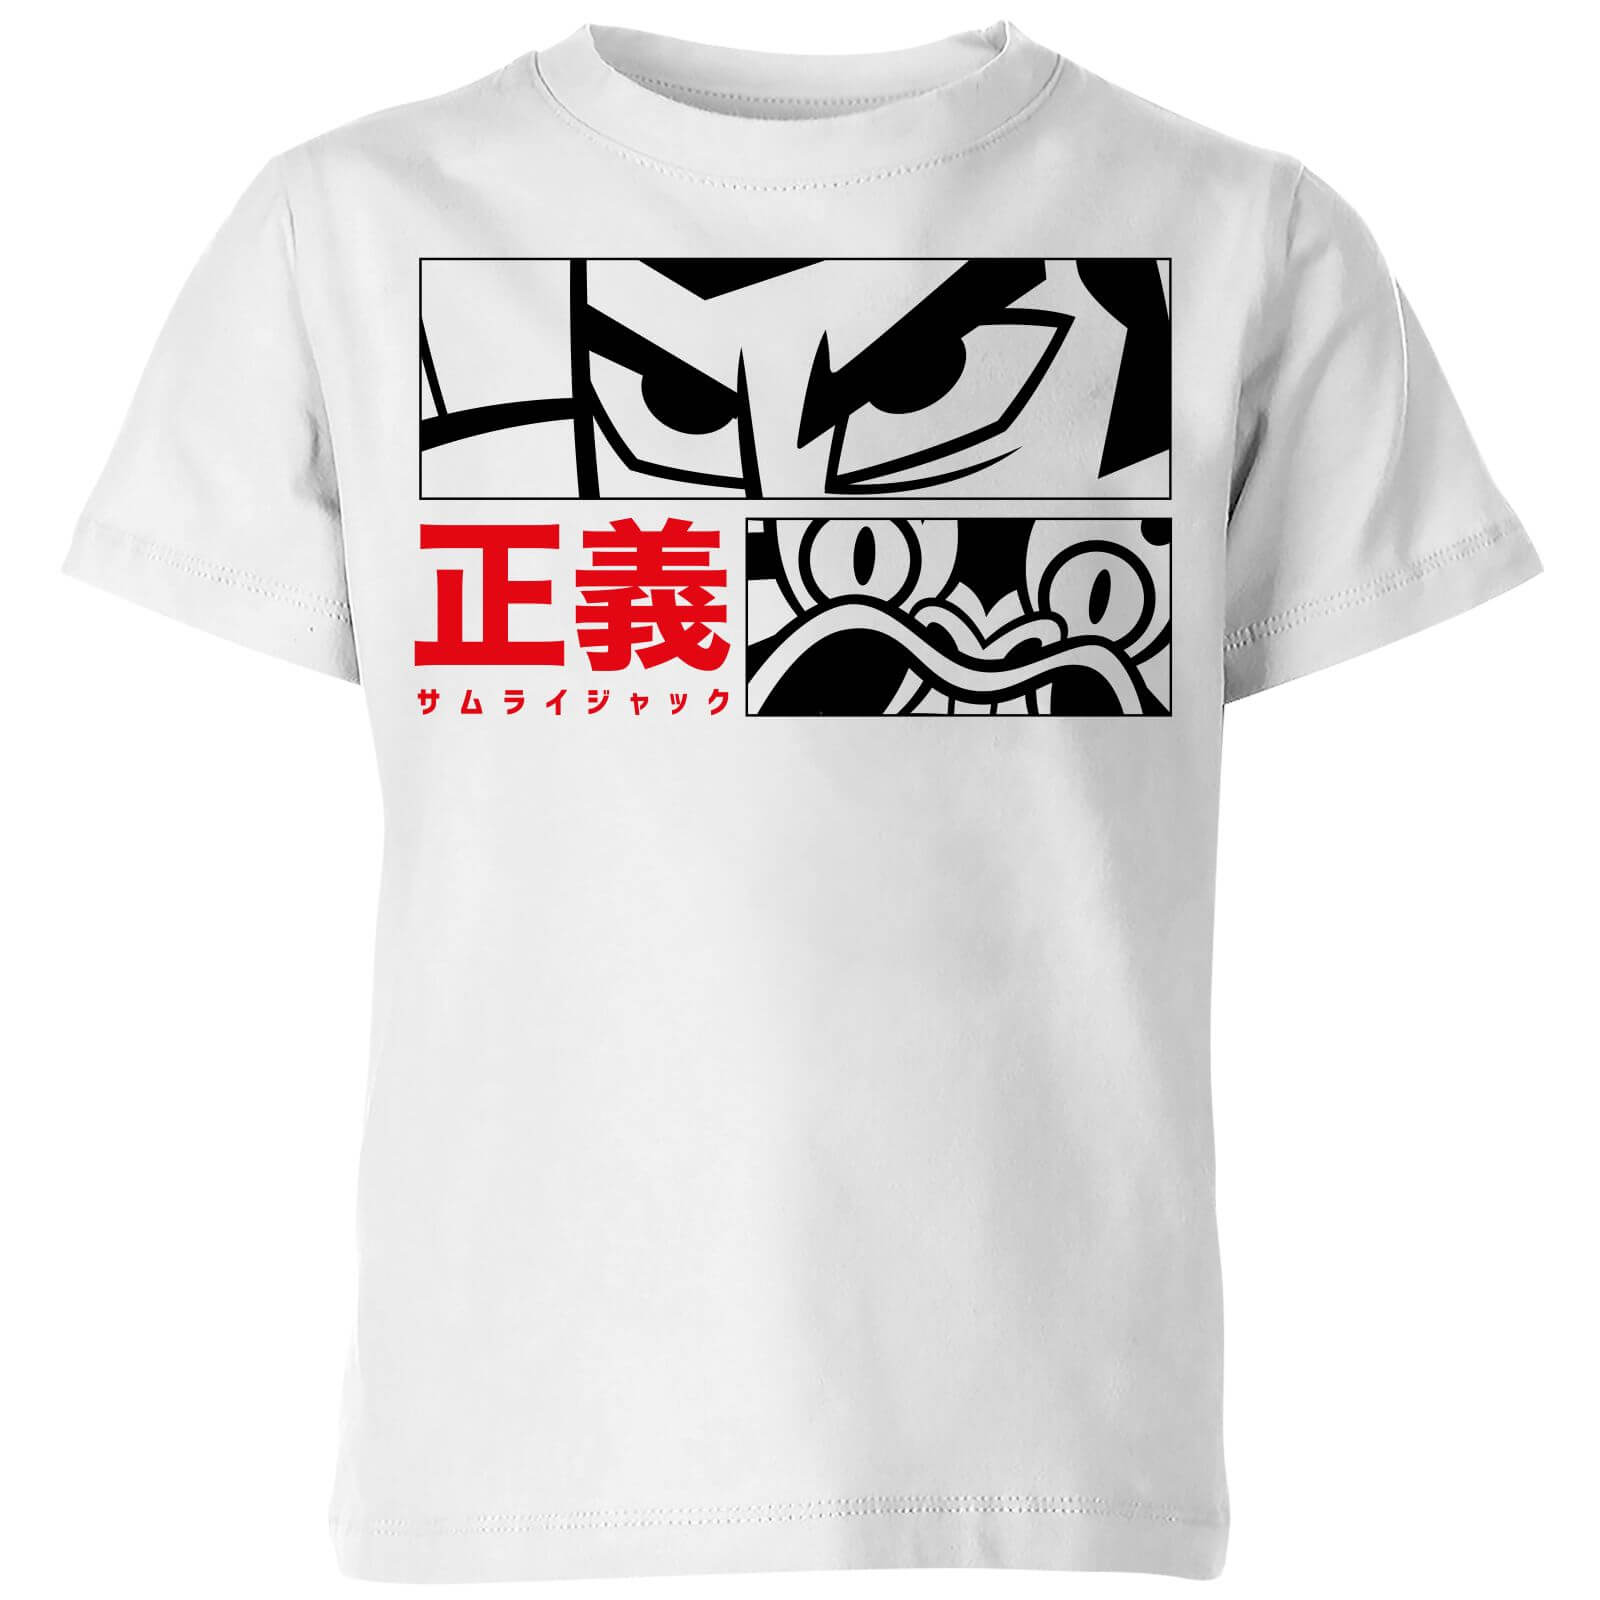 Samurai Jack Arch Nemesis Kids' T-Shirt - White - 3-4 Years - White